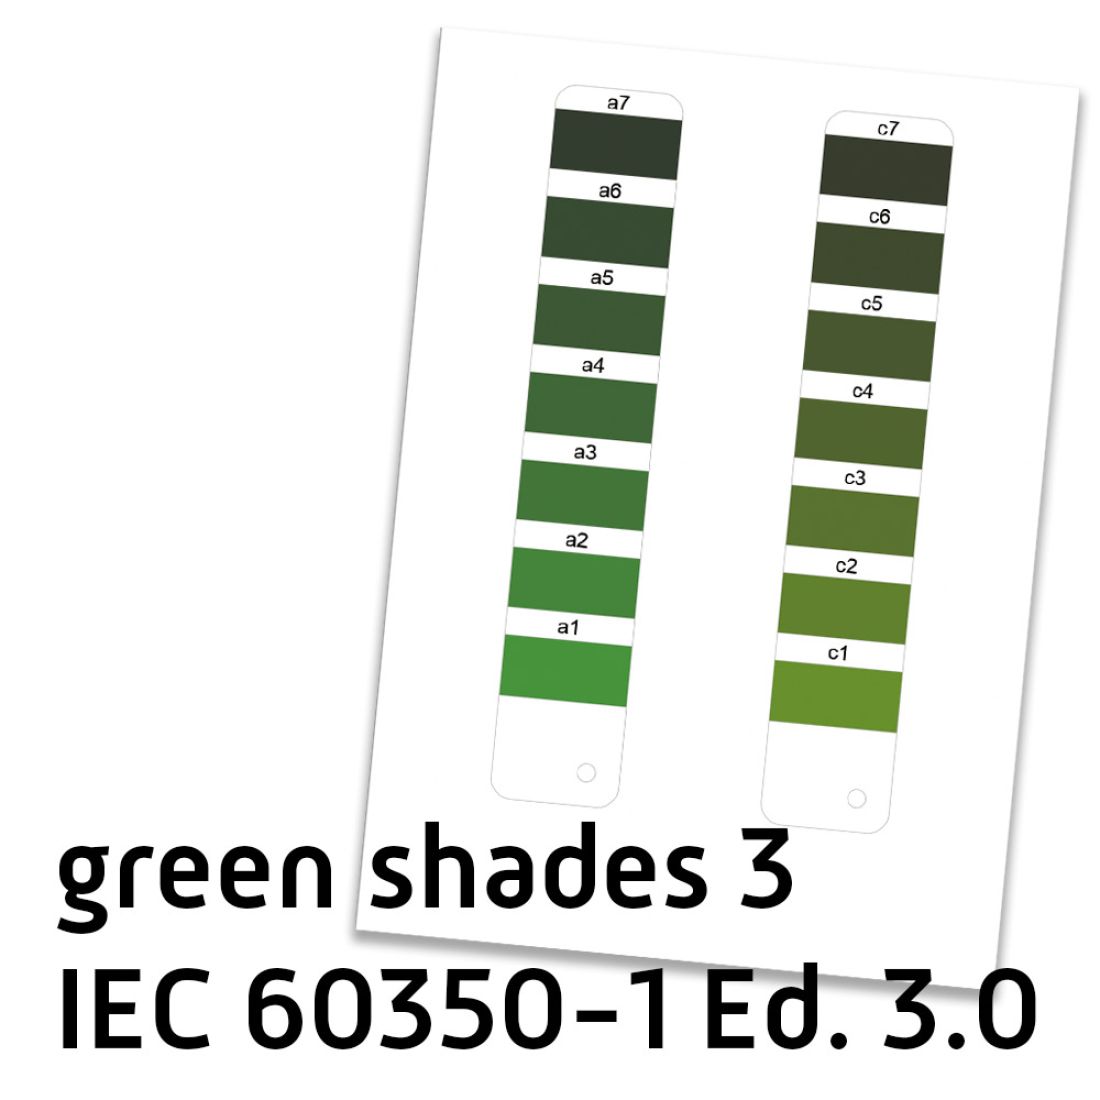 Grüne IEC 60350-1 Ed. 3.0 Farbmuster Seite 3